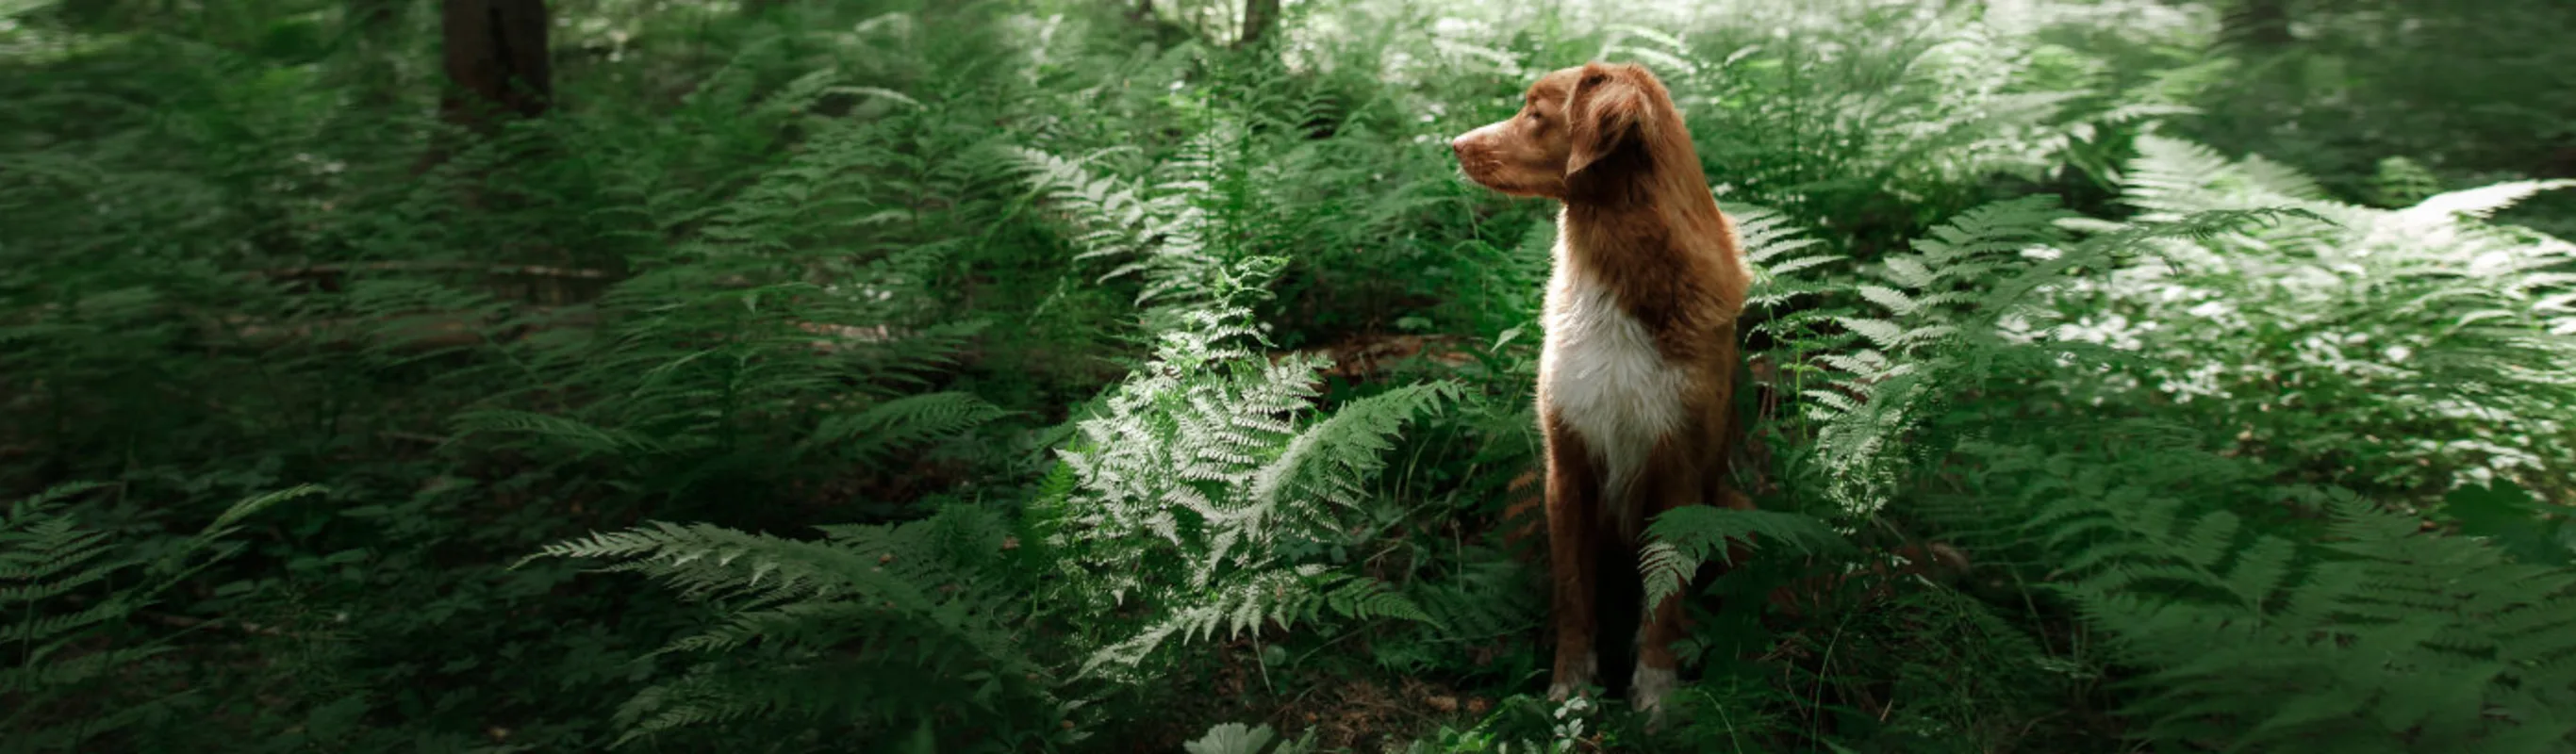 Brown Dog Sitting in a Fern Forest